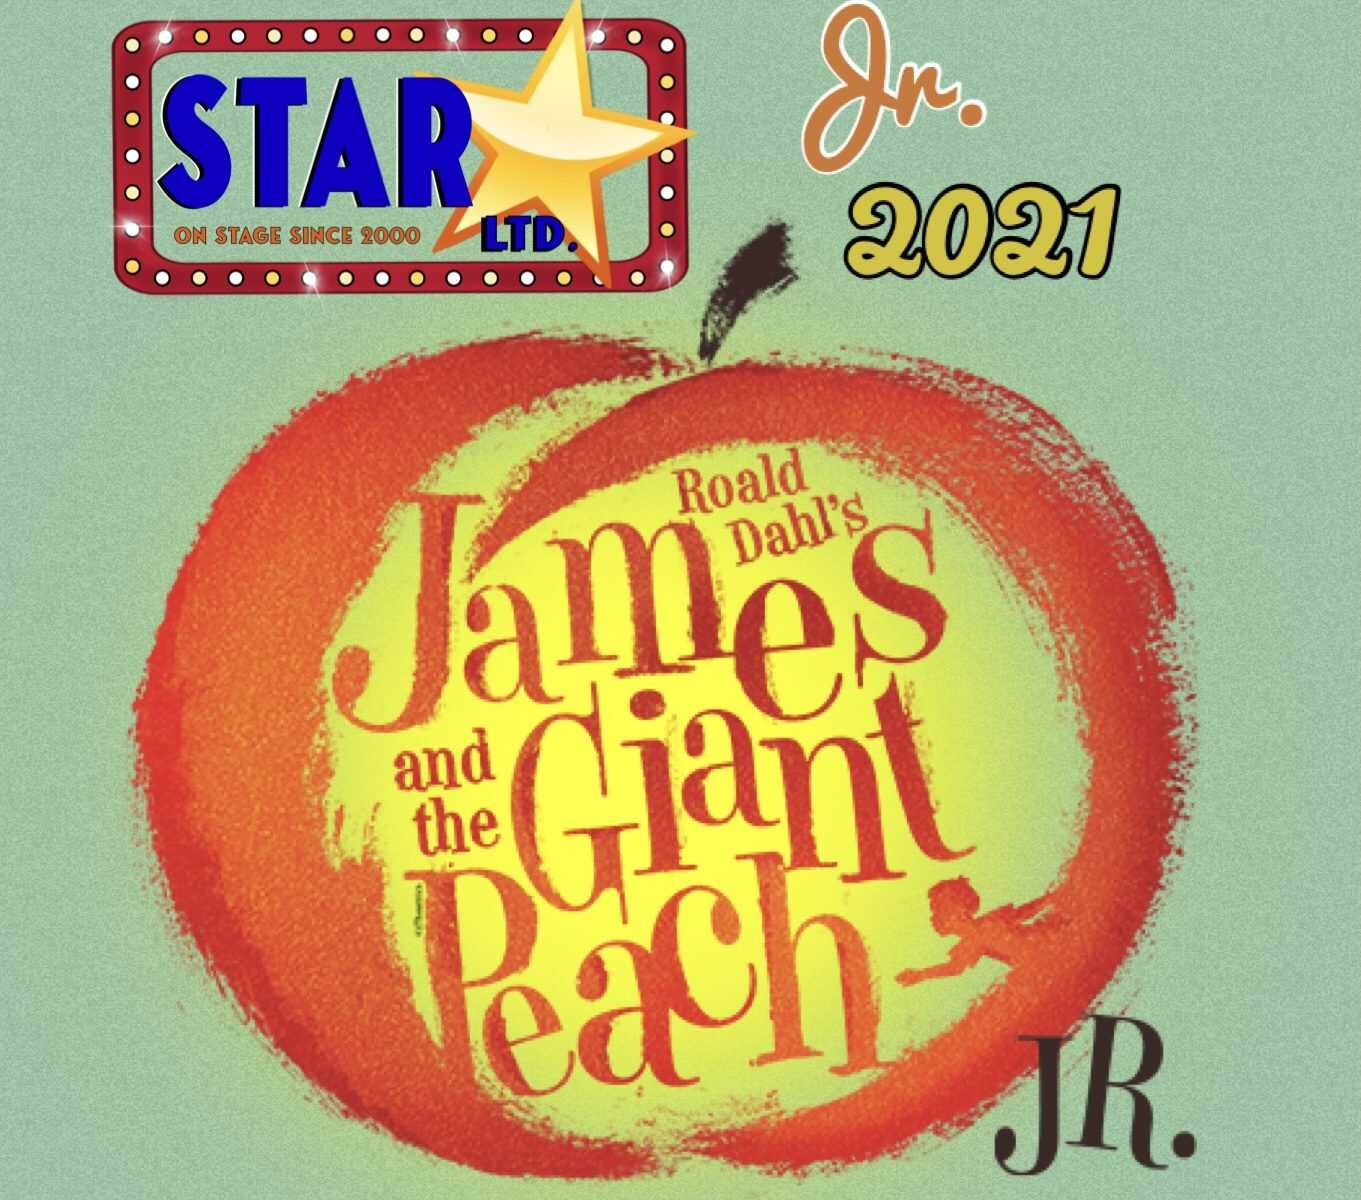 Star Jr 2021 James and the Giant Peach Jr.